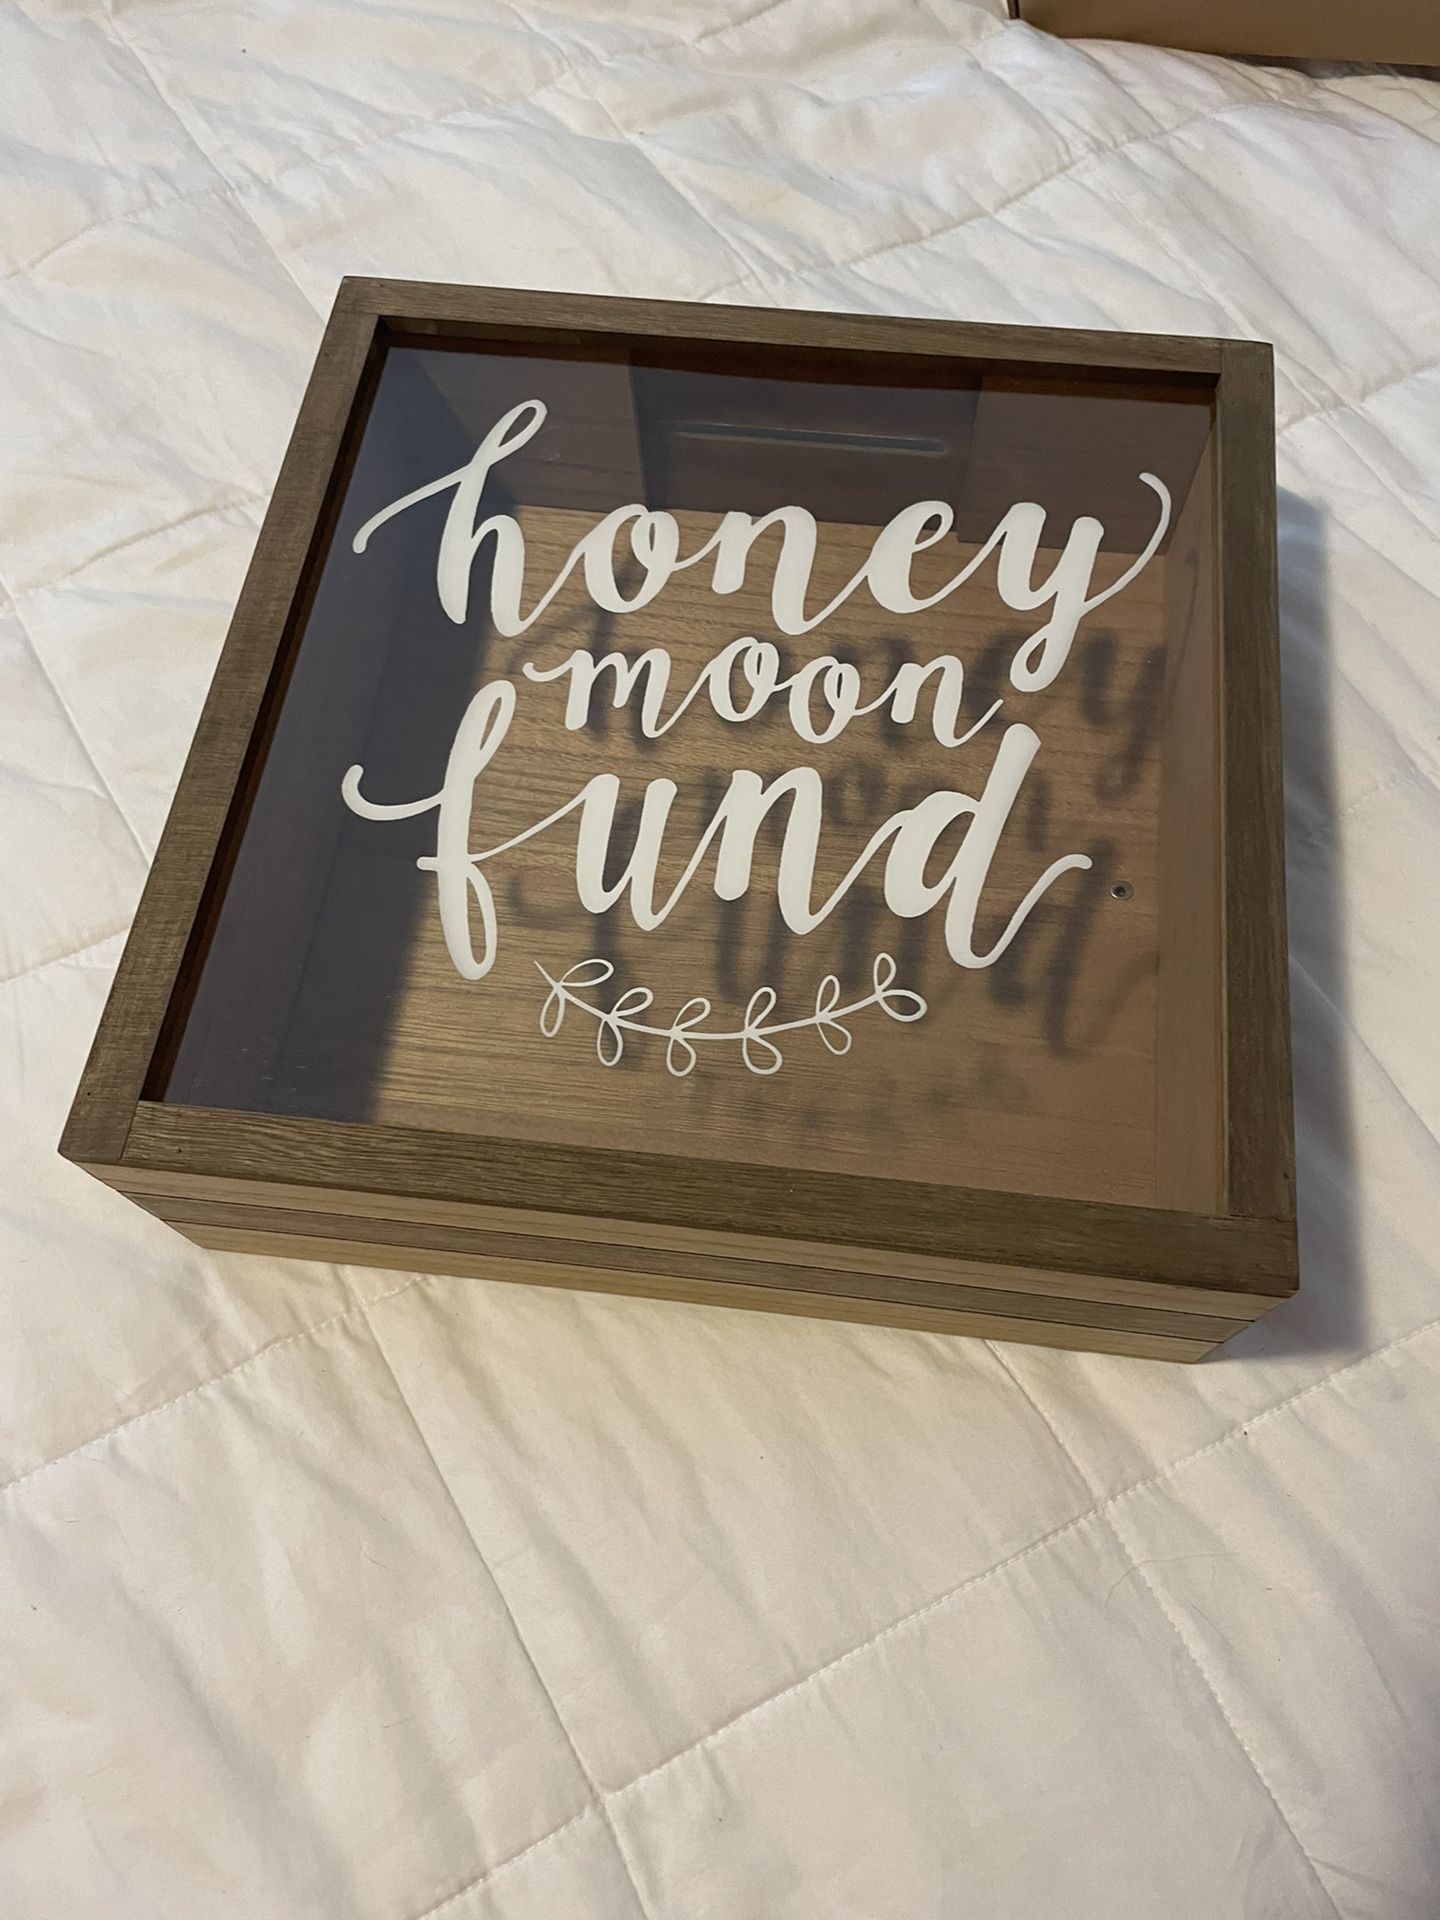 Honeymoon Fund Box For Wedding